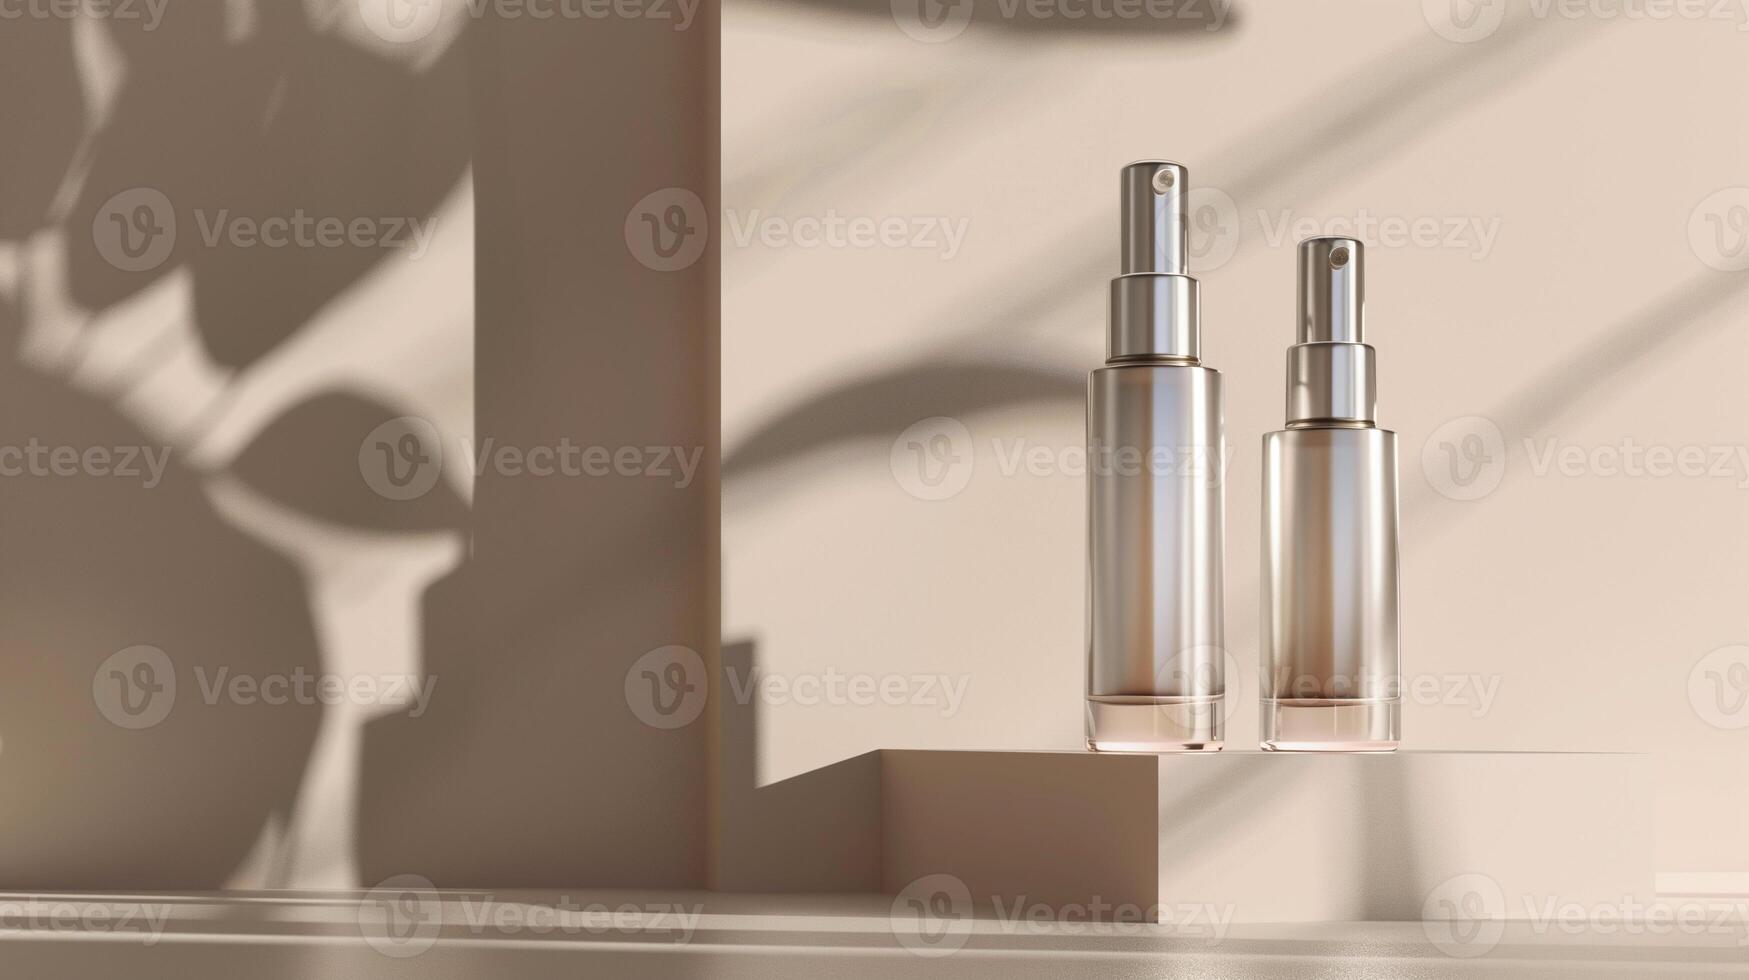 AI generated Two sleek cosmetic spray bottles bask in the soft, warm light, casting elegant shadows, epitomizing minimalist luxury in beauty product design photo